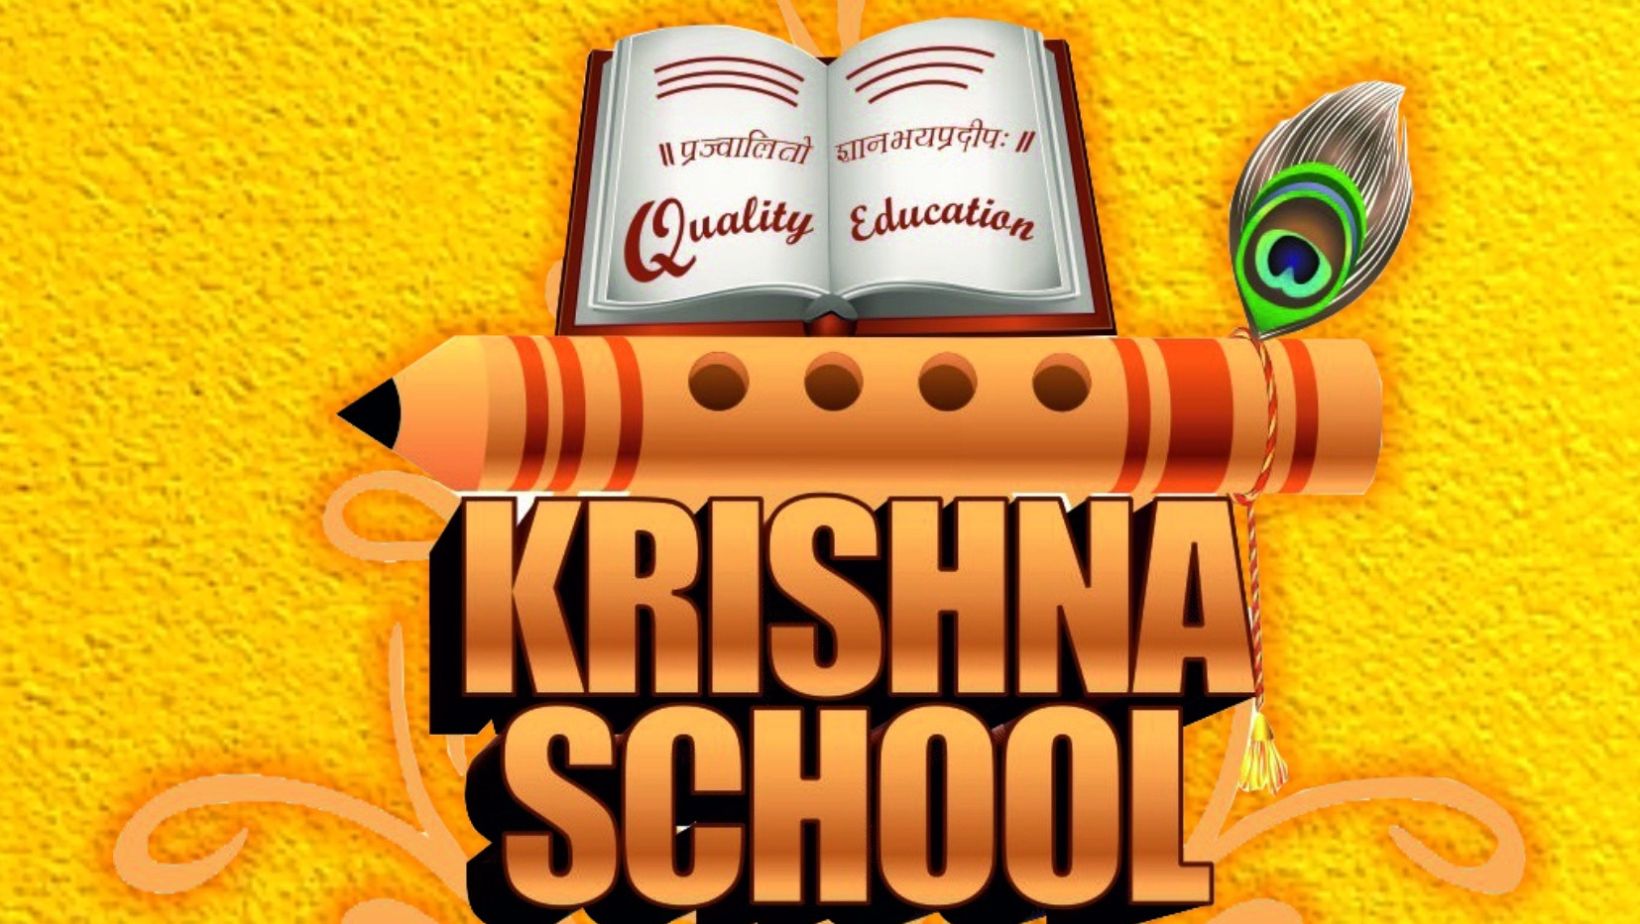 Krishna Science School